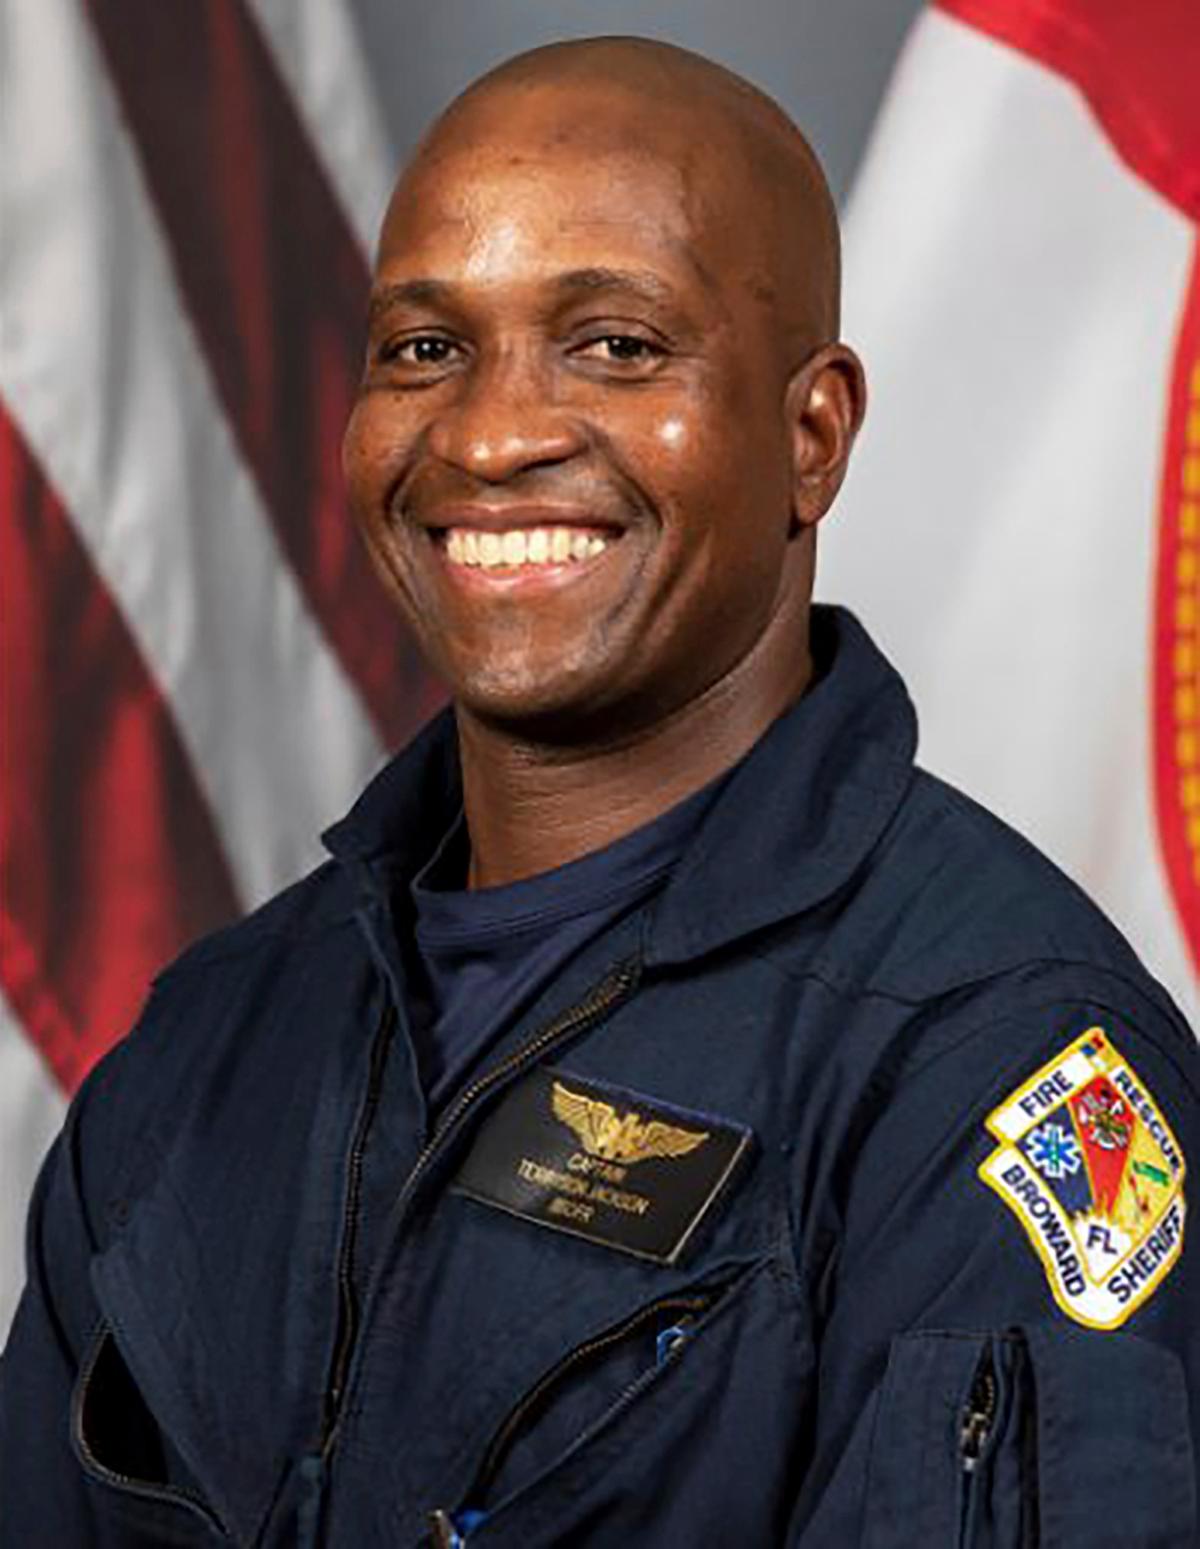 Broward County Fire-Rescue Capt. Terryson Jackson. (Broward County Sheriff's Office via AP)